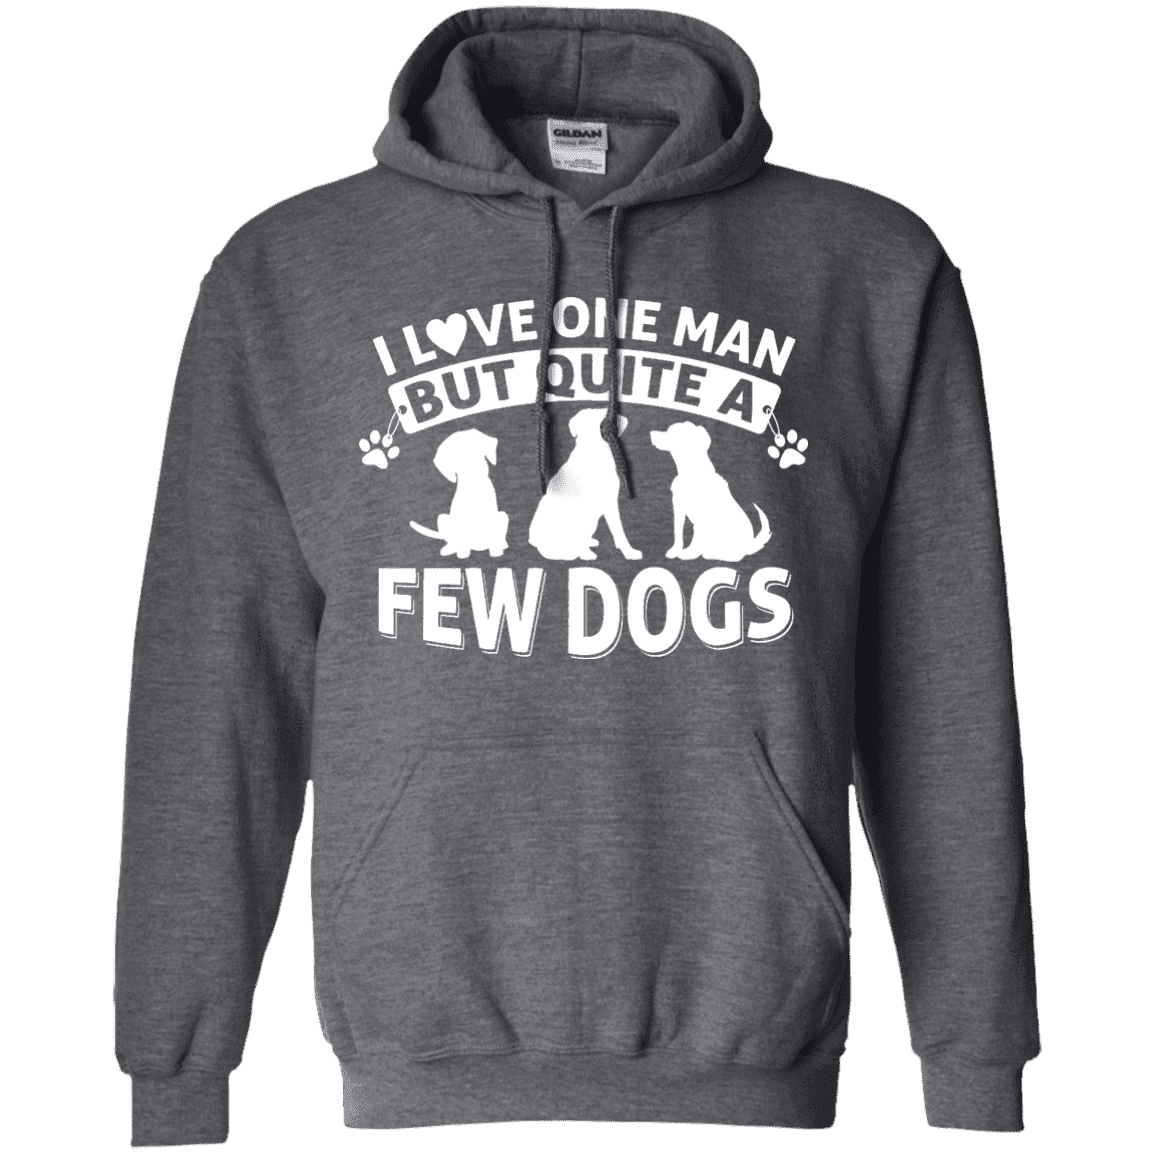 I Love One Man & A Few Dogs  - Hoodie.